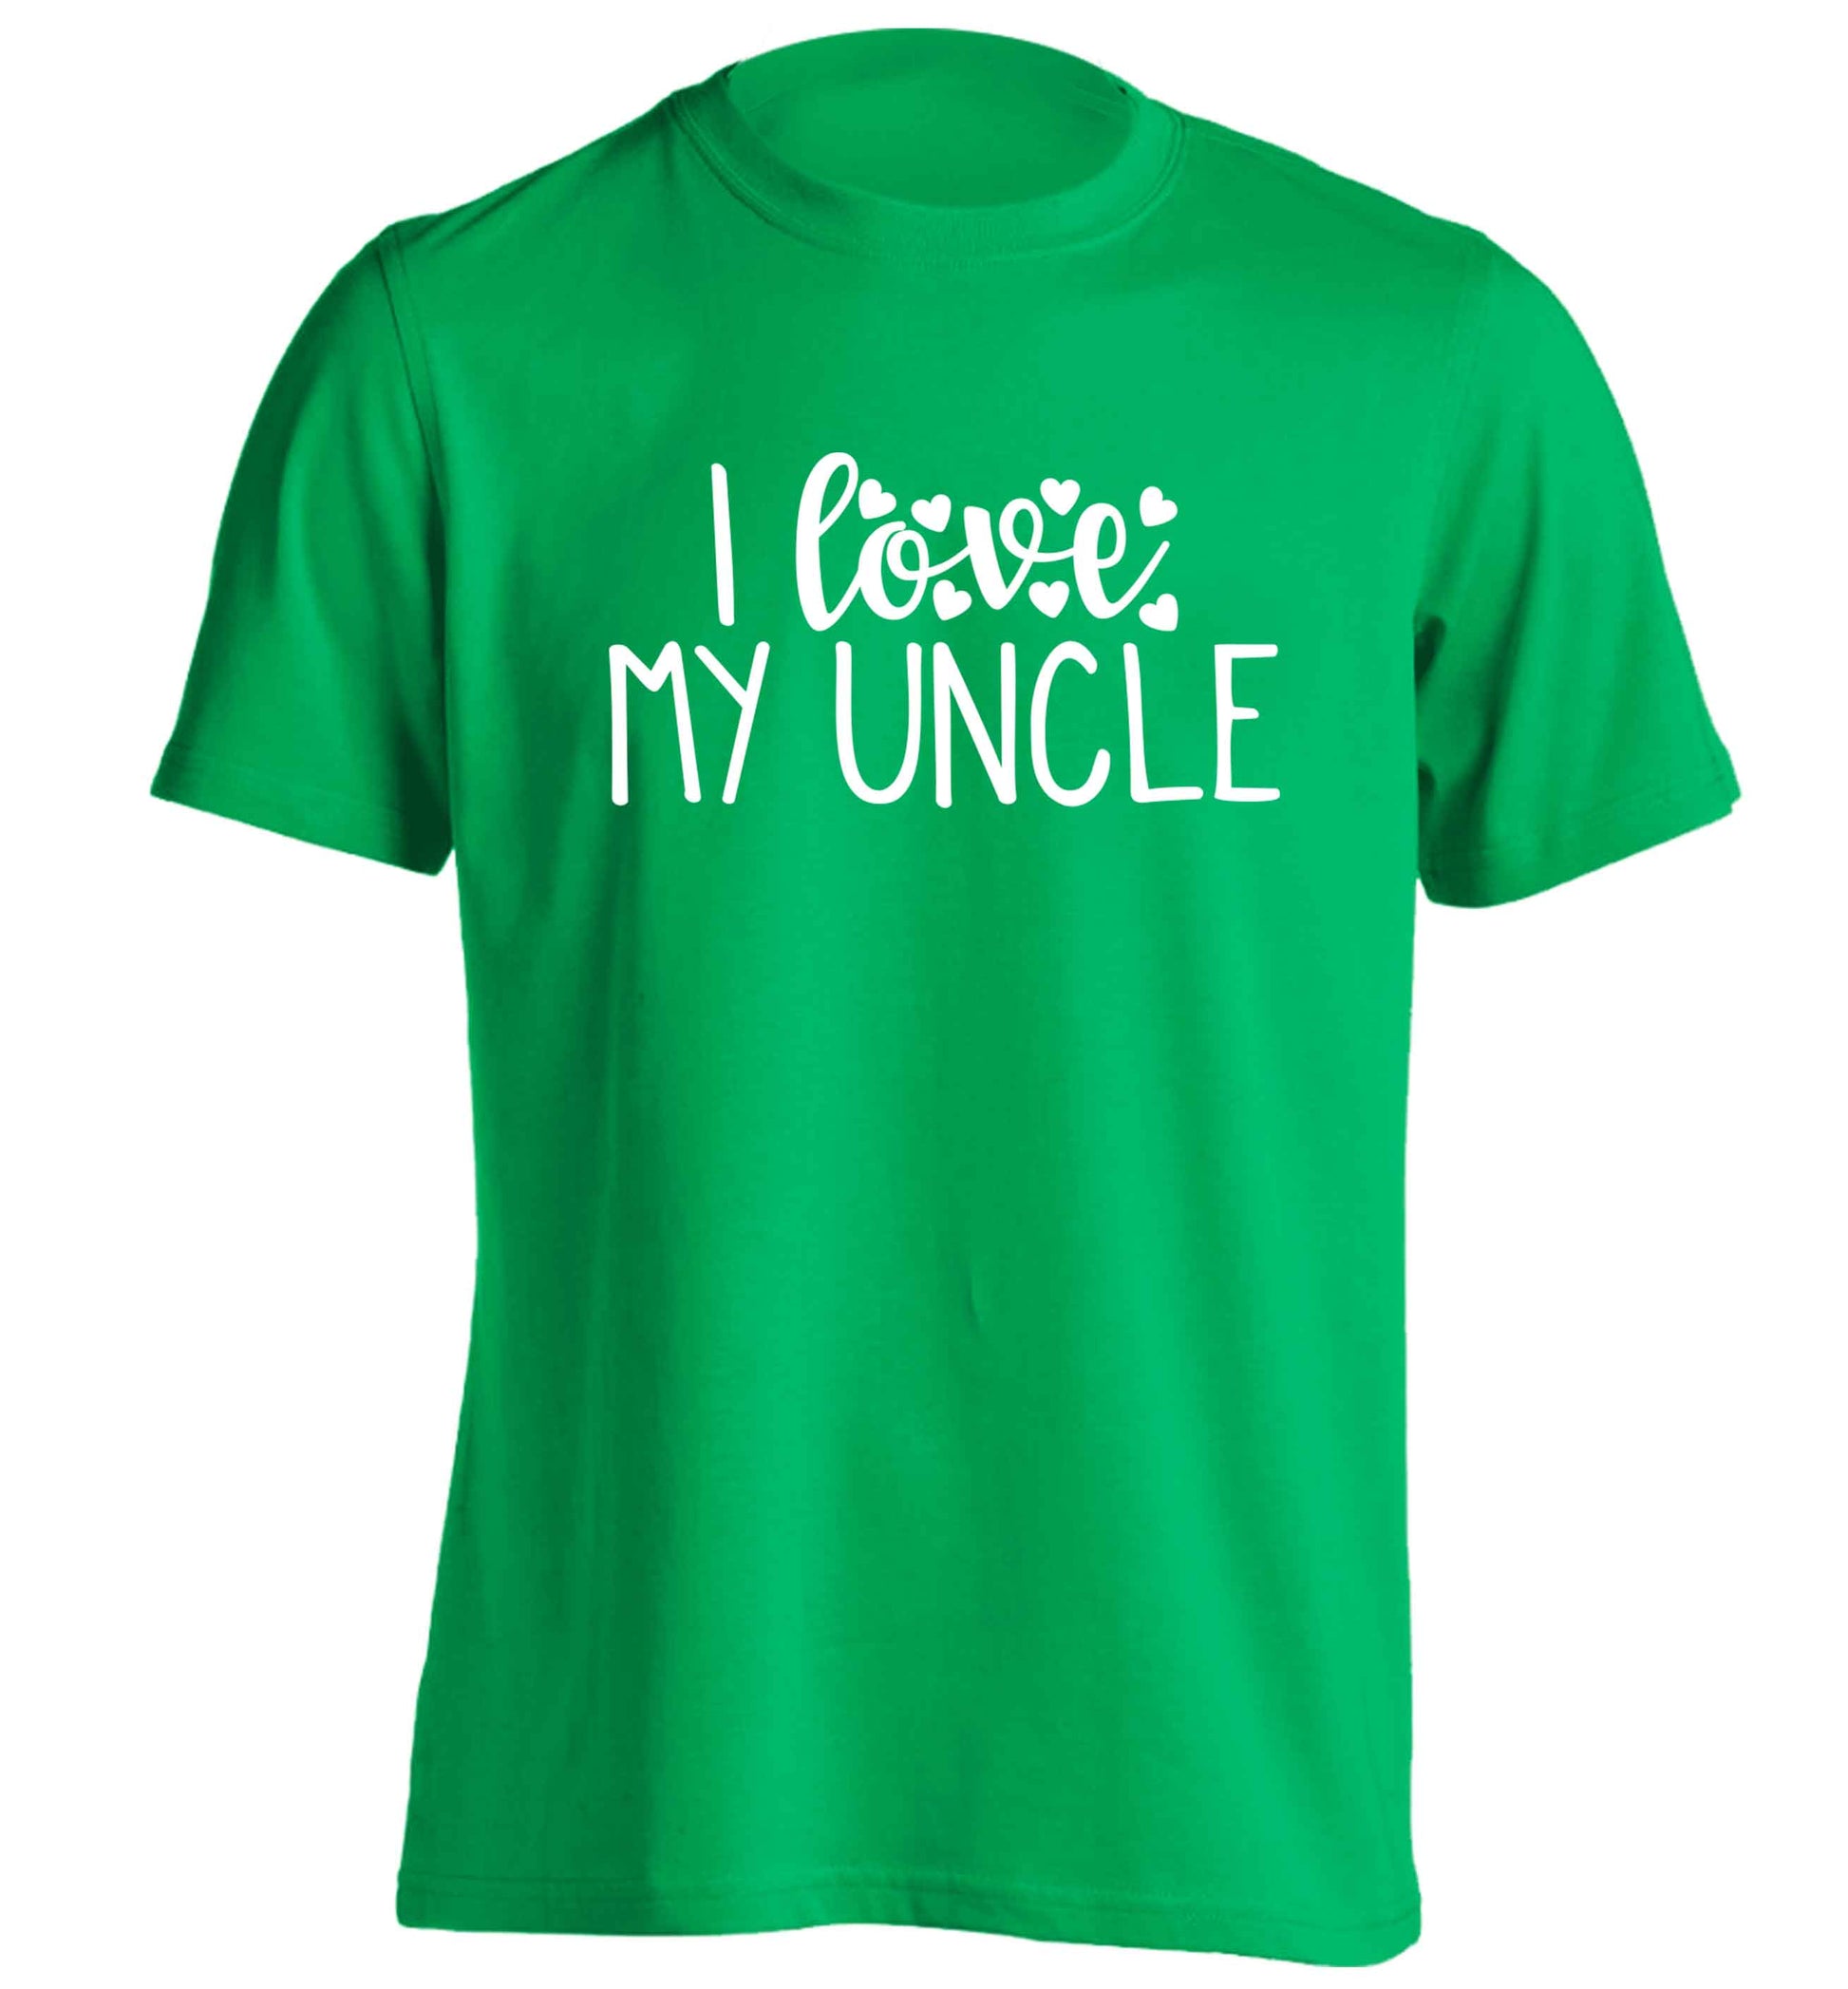 I love my uncle adults unisex green Tshirt 2XL